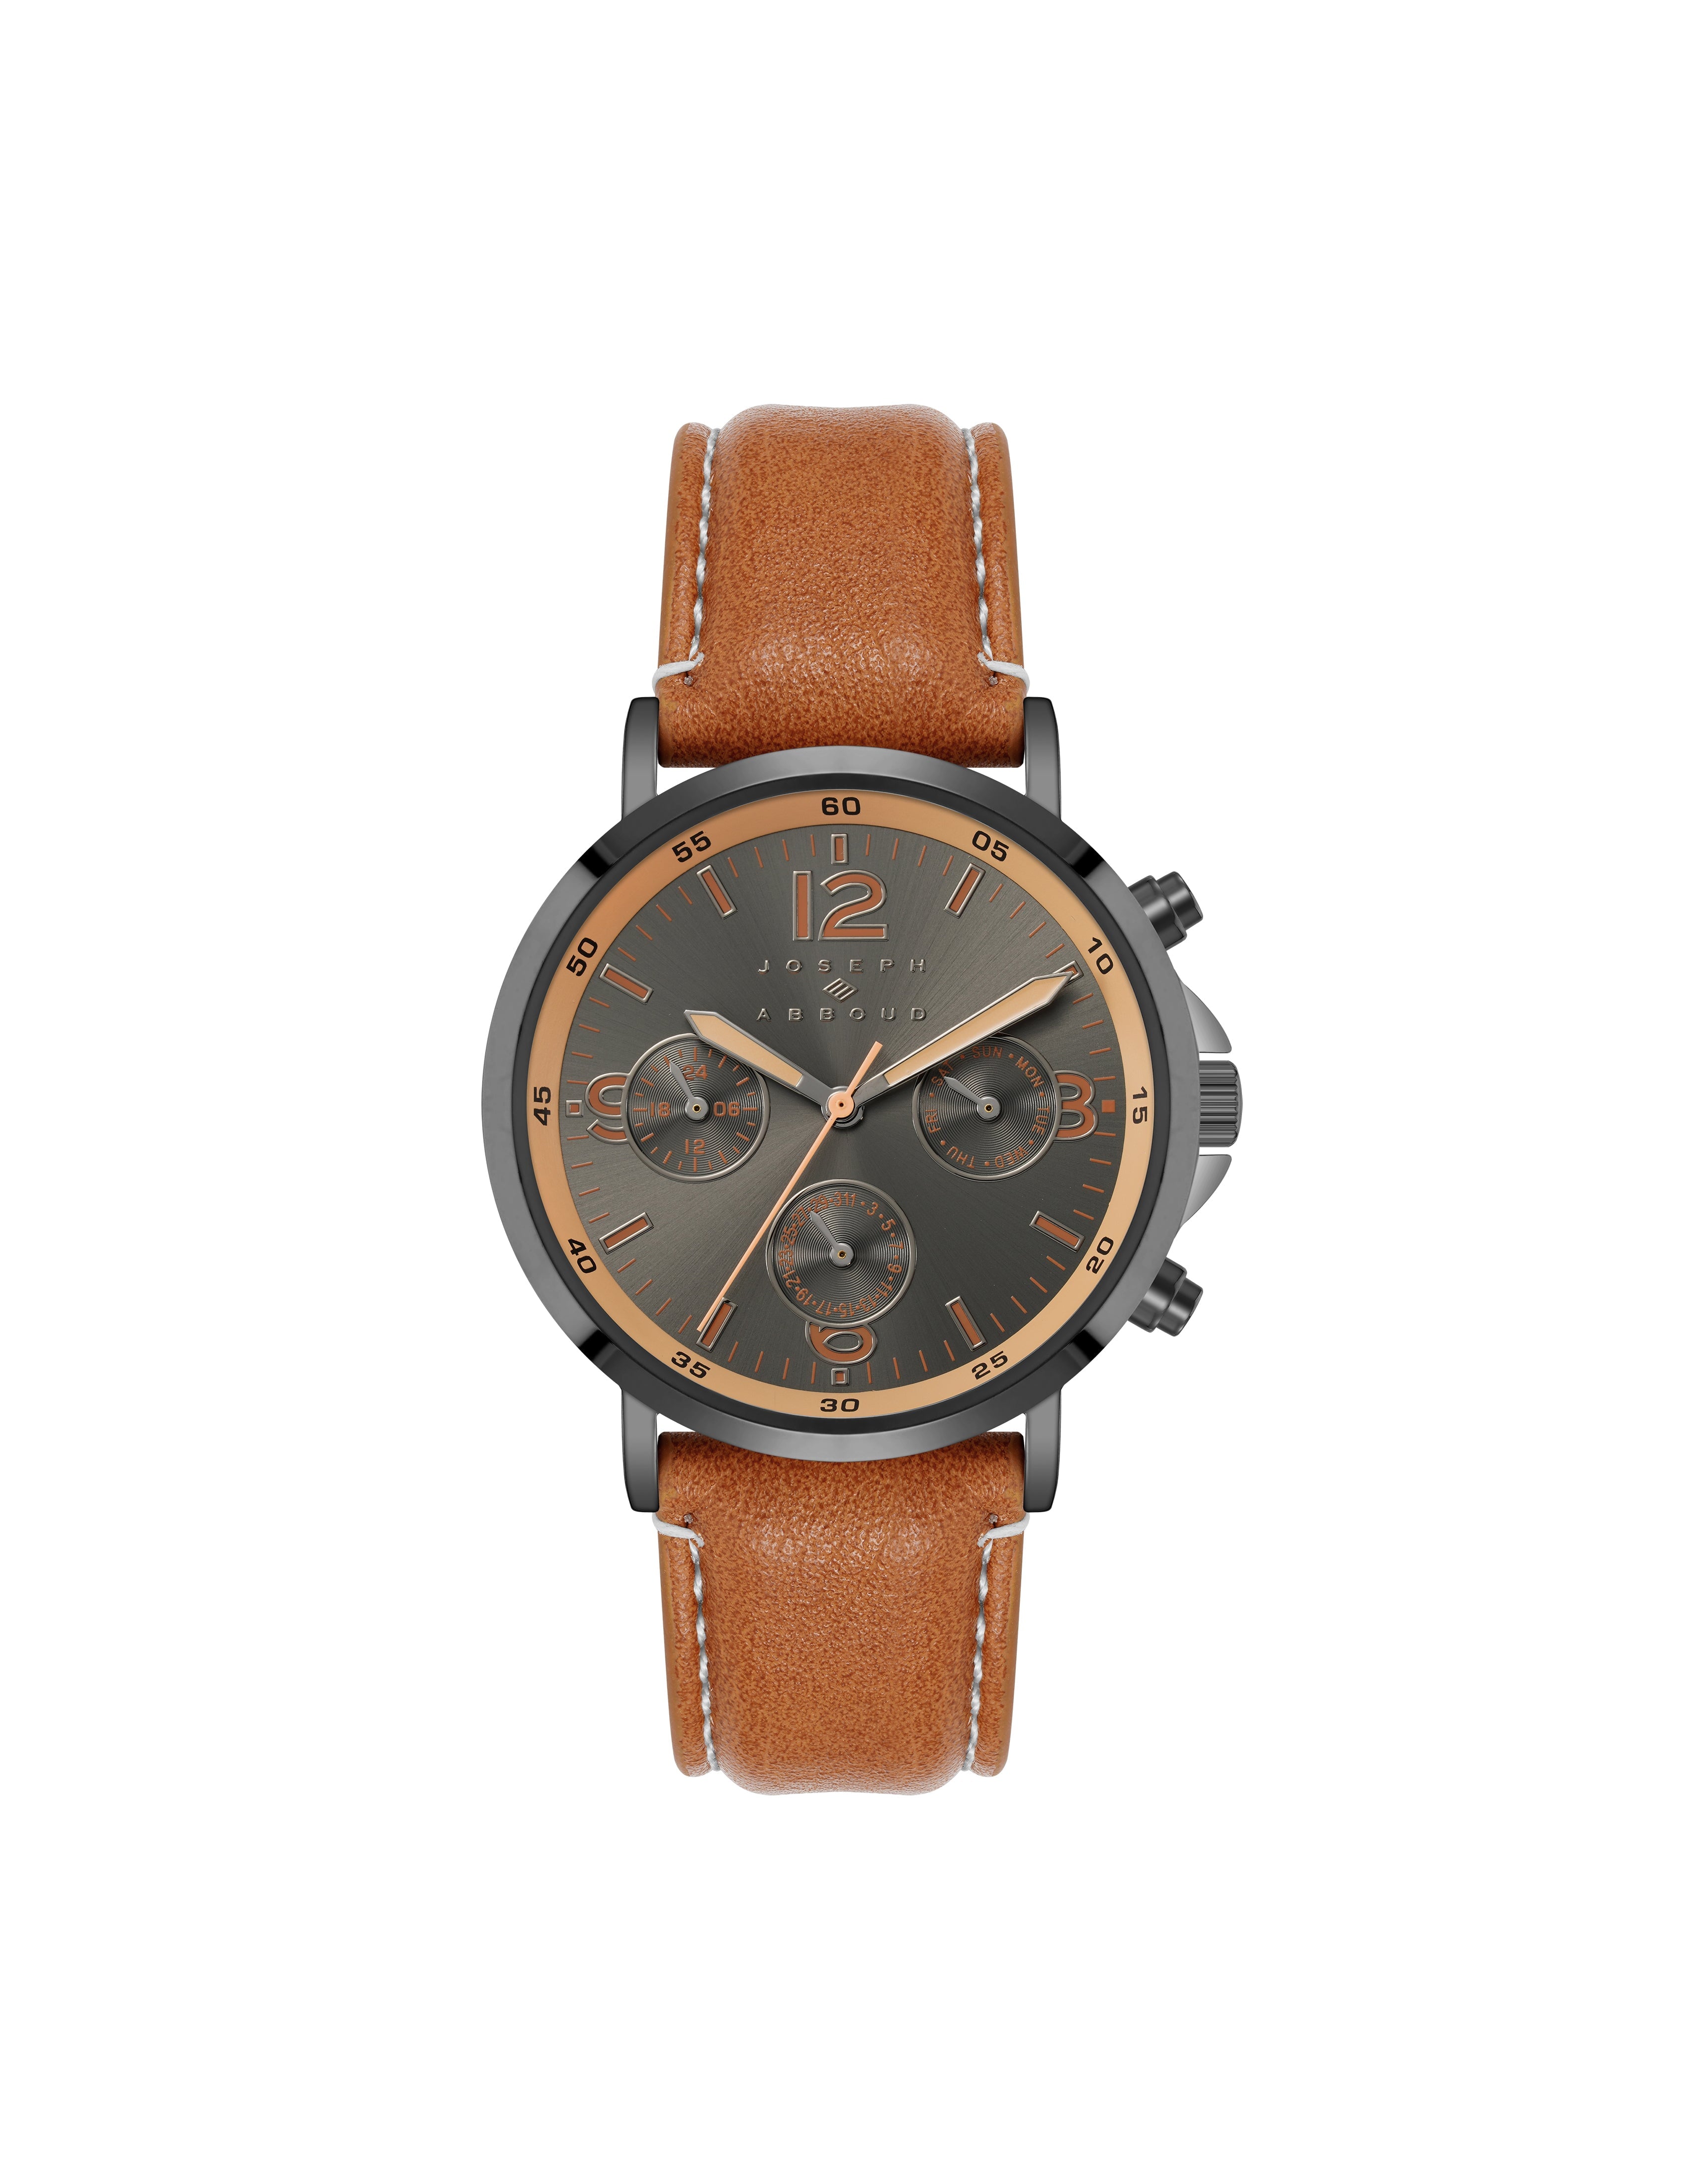 Zenith Watches | Authorized Dealer - Manfredi Jewels